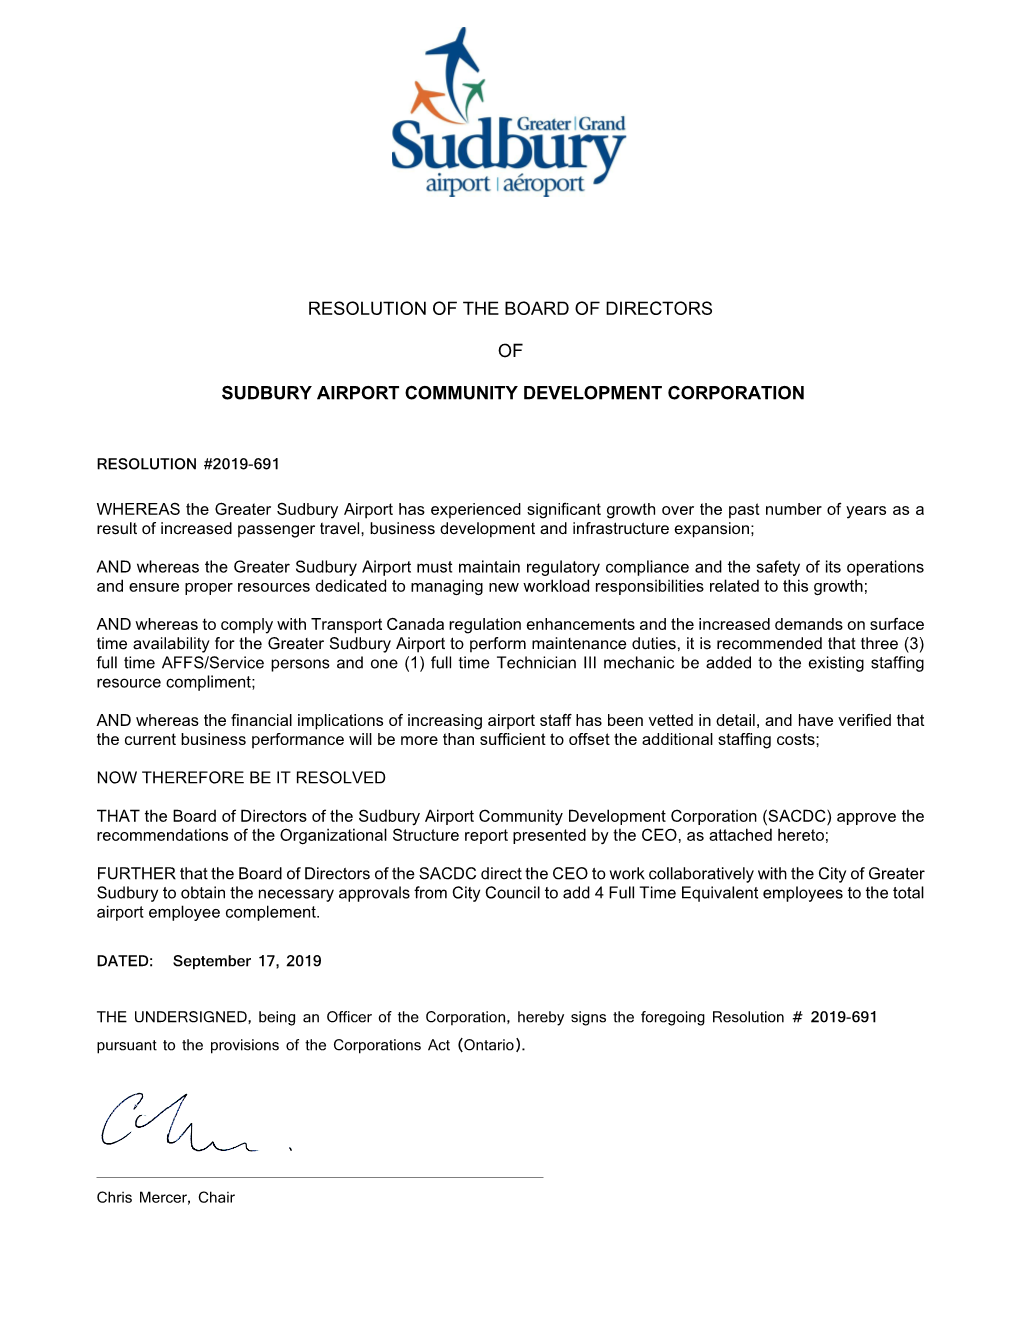 Resolution of the Board of Directors of Sudbury